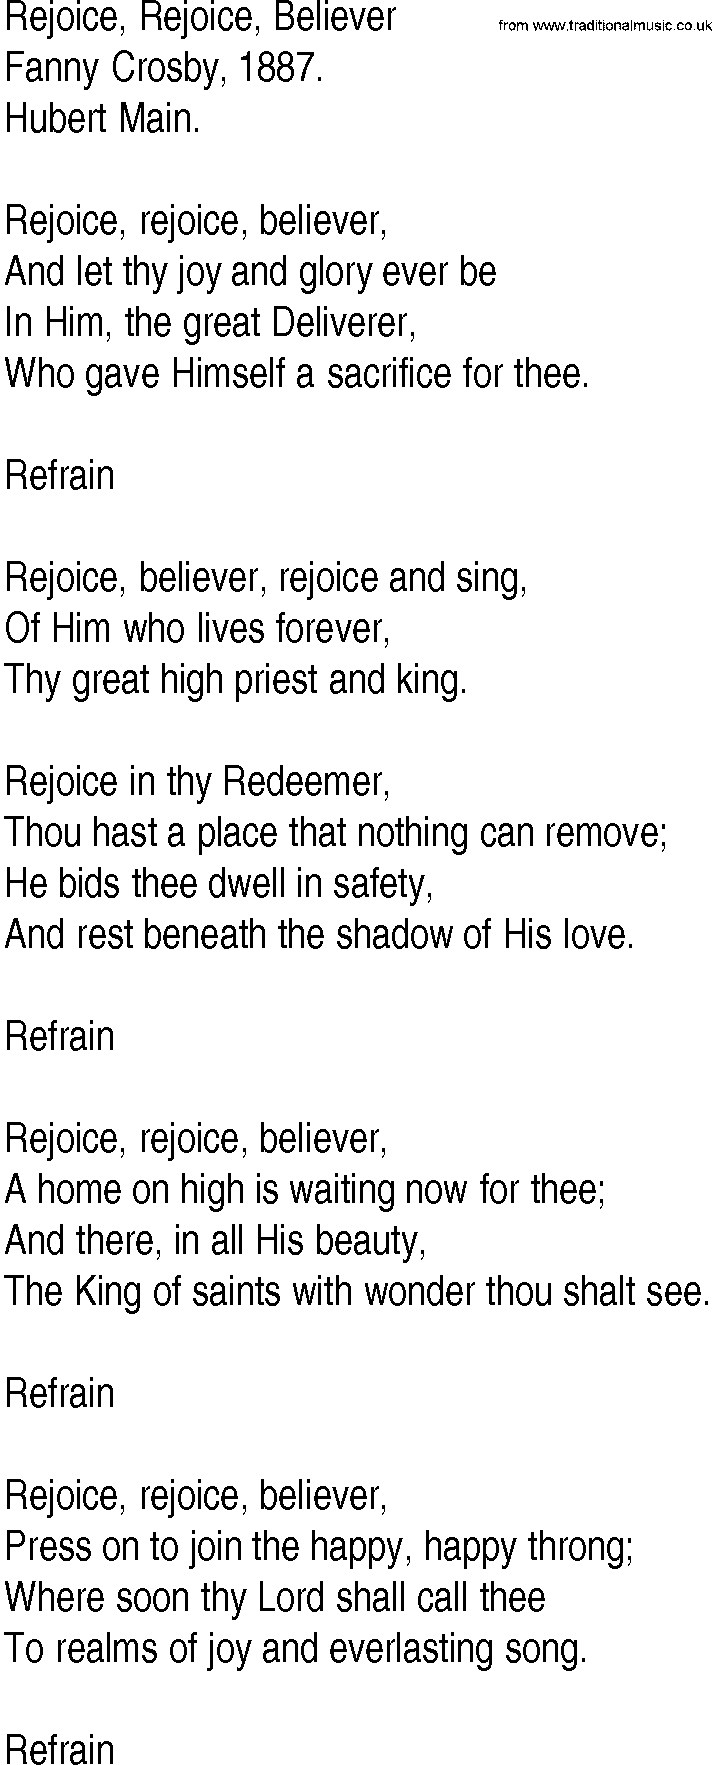 Hymn And Gospel Song Lyrics For Rejoice Rejoice Believer By